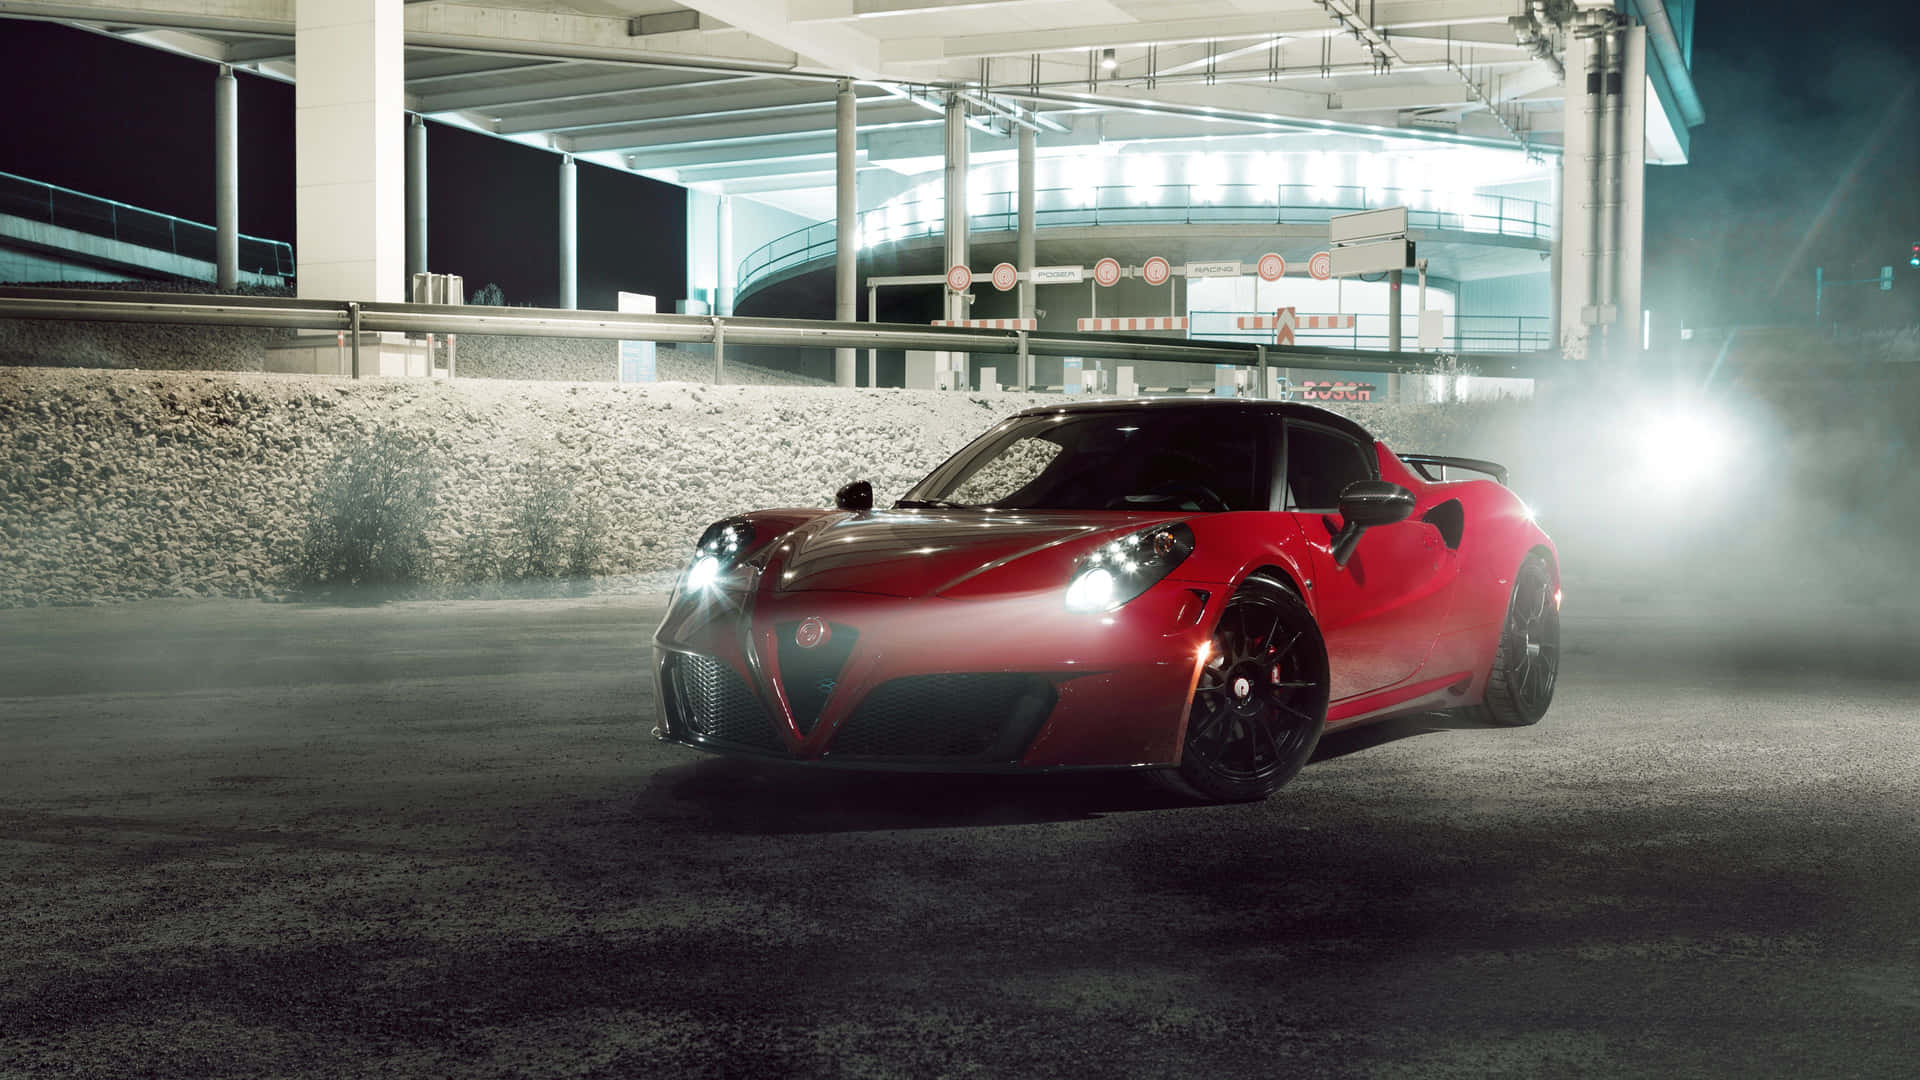 Stunning Alfa Romeo 4c In Action